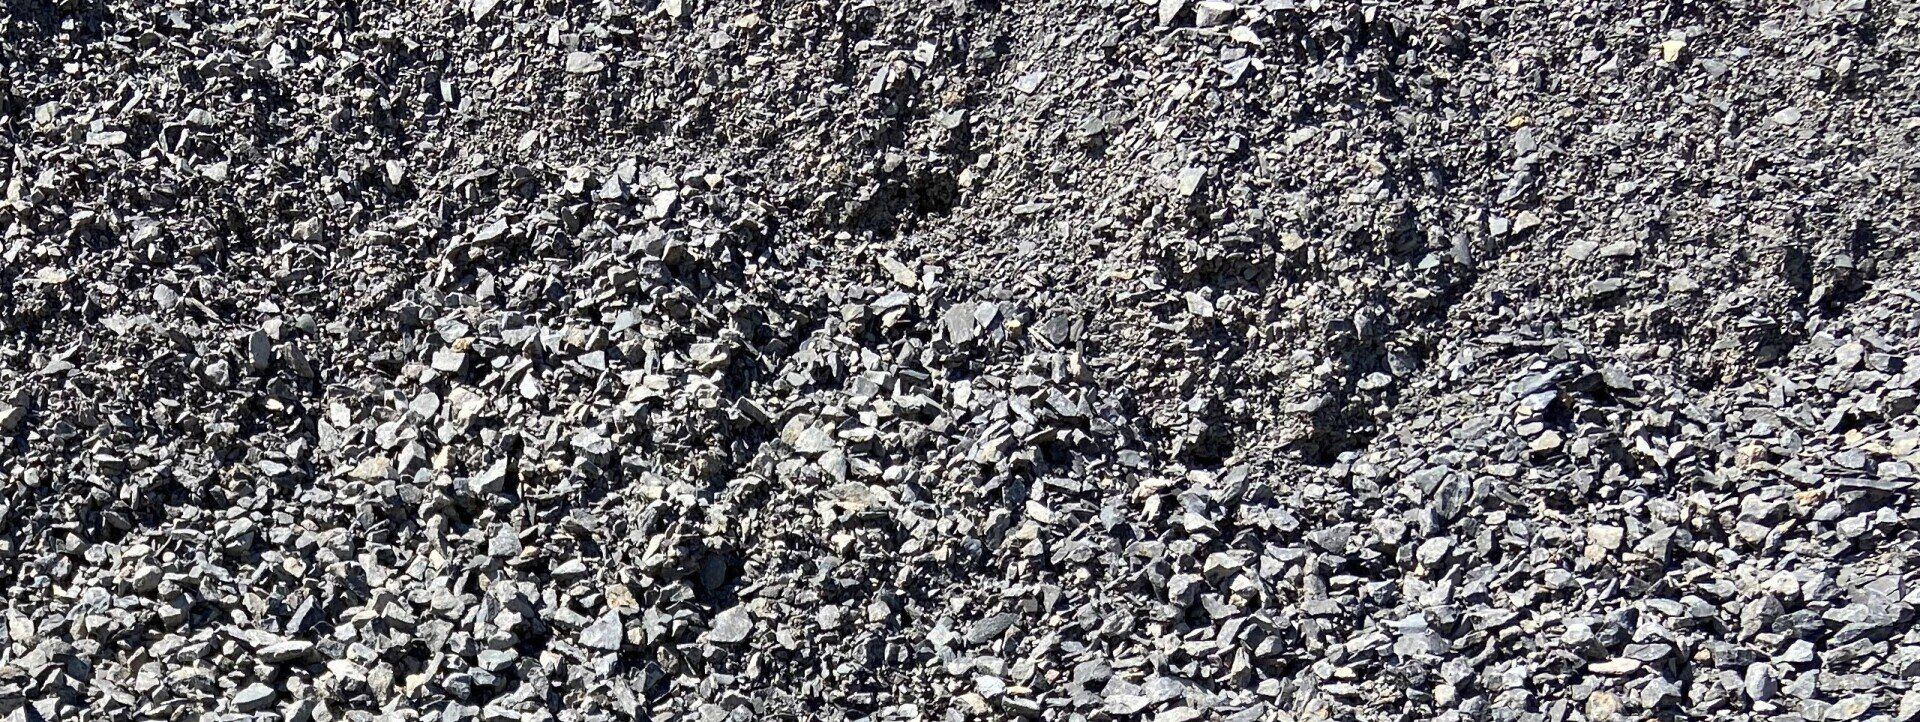 Limestone crusher run — Pecks Mill, WV — Ferrell Excavating Co INC.